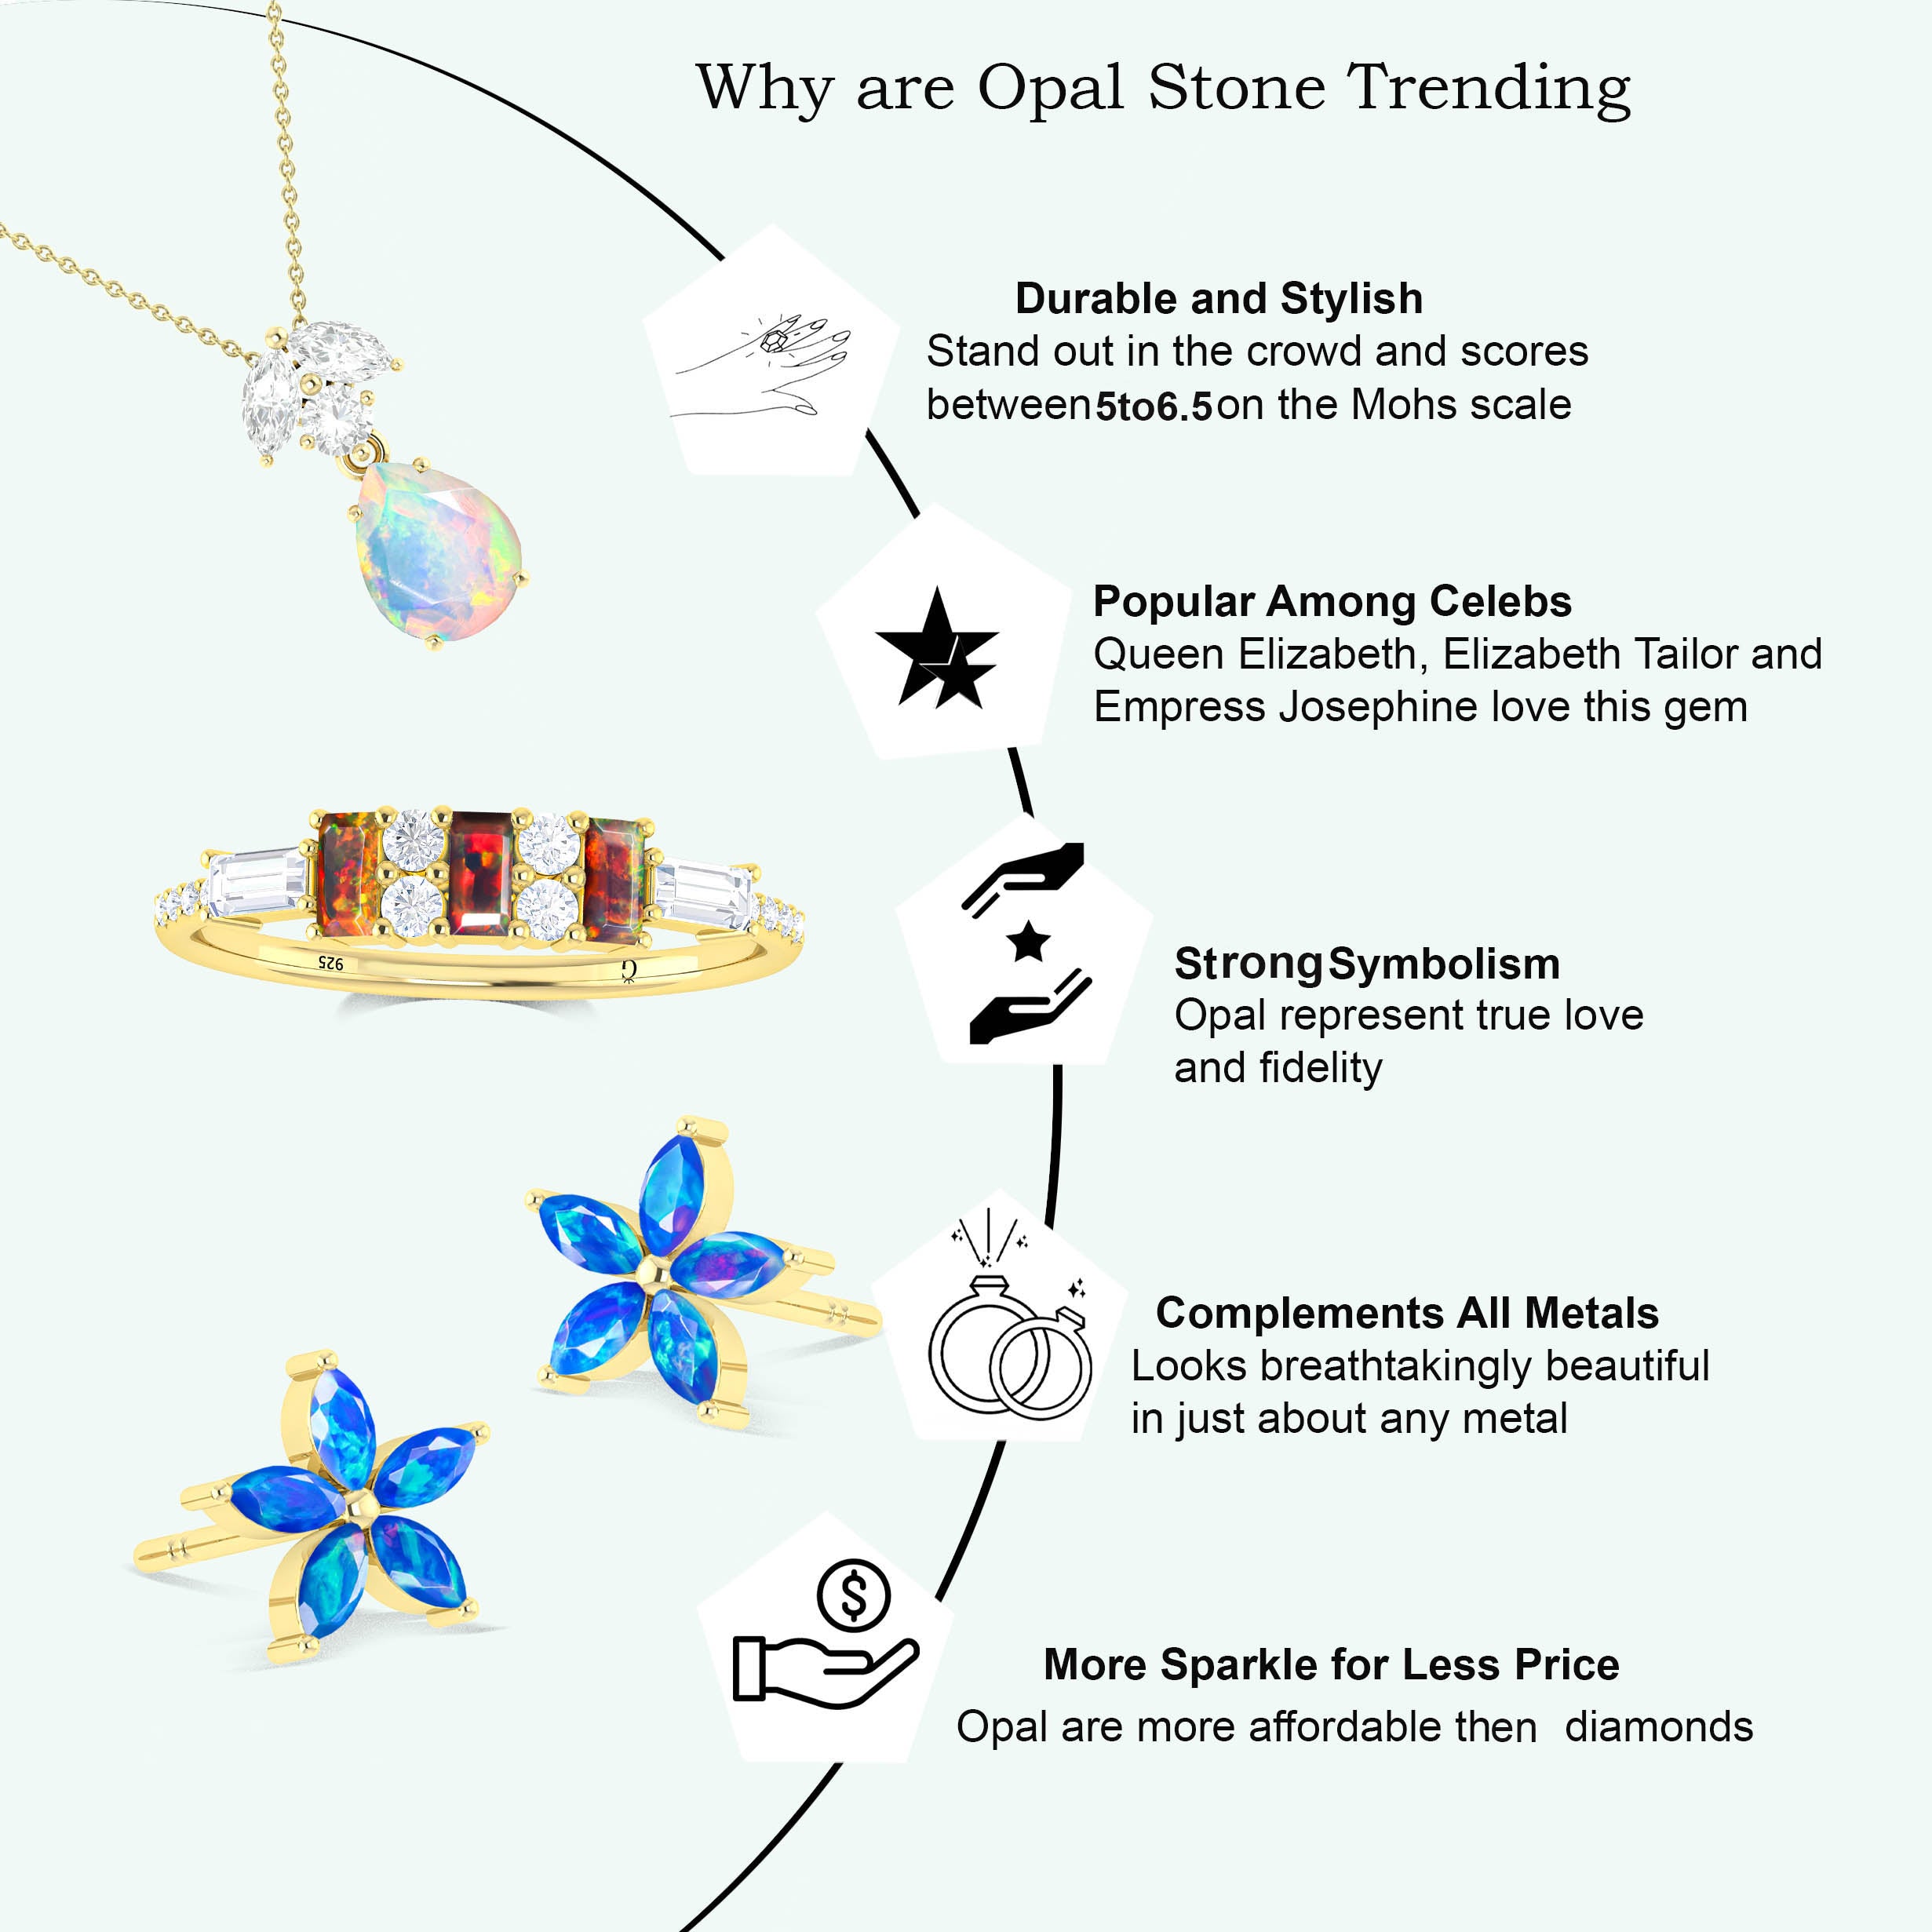 White Ethiopian Opal Pear Design Stud Earring